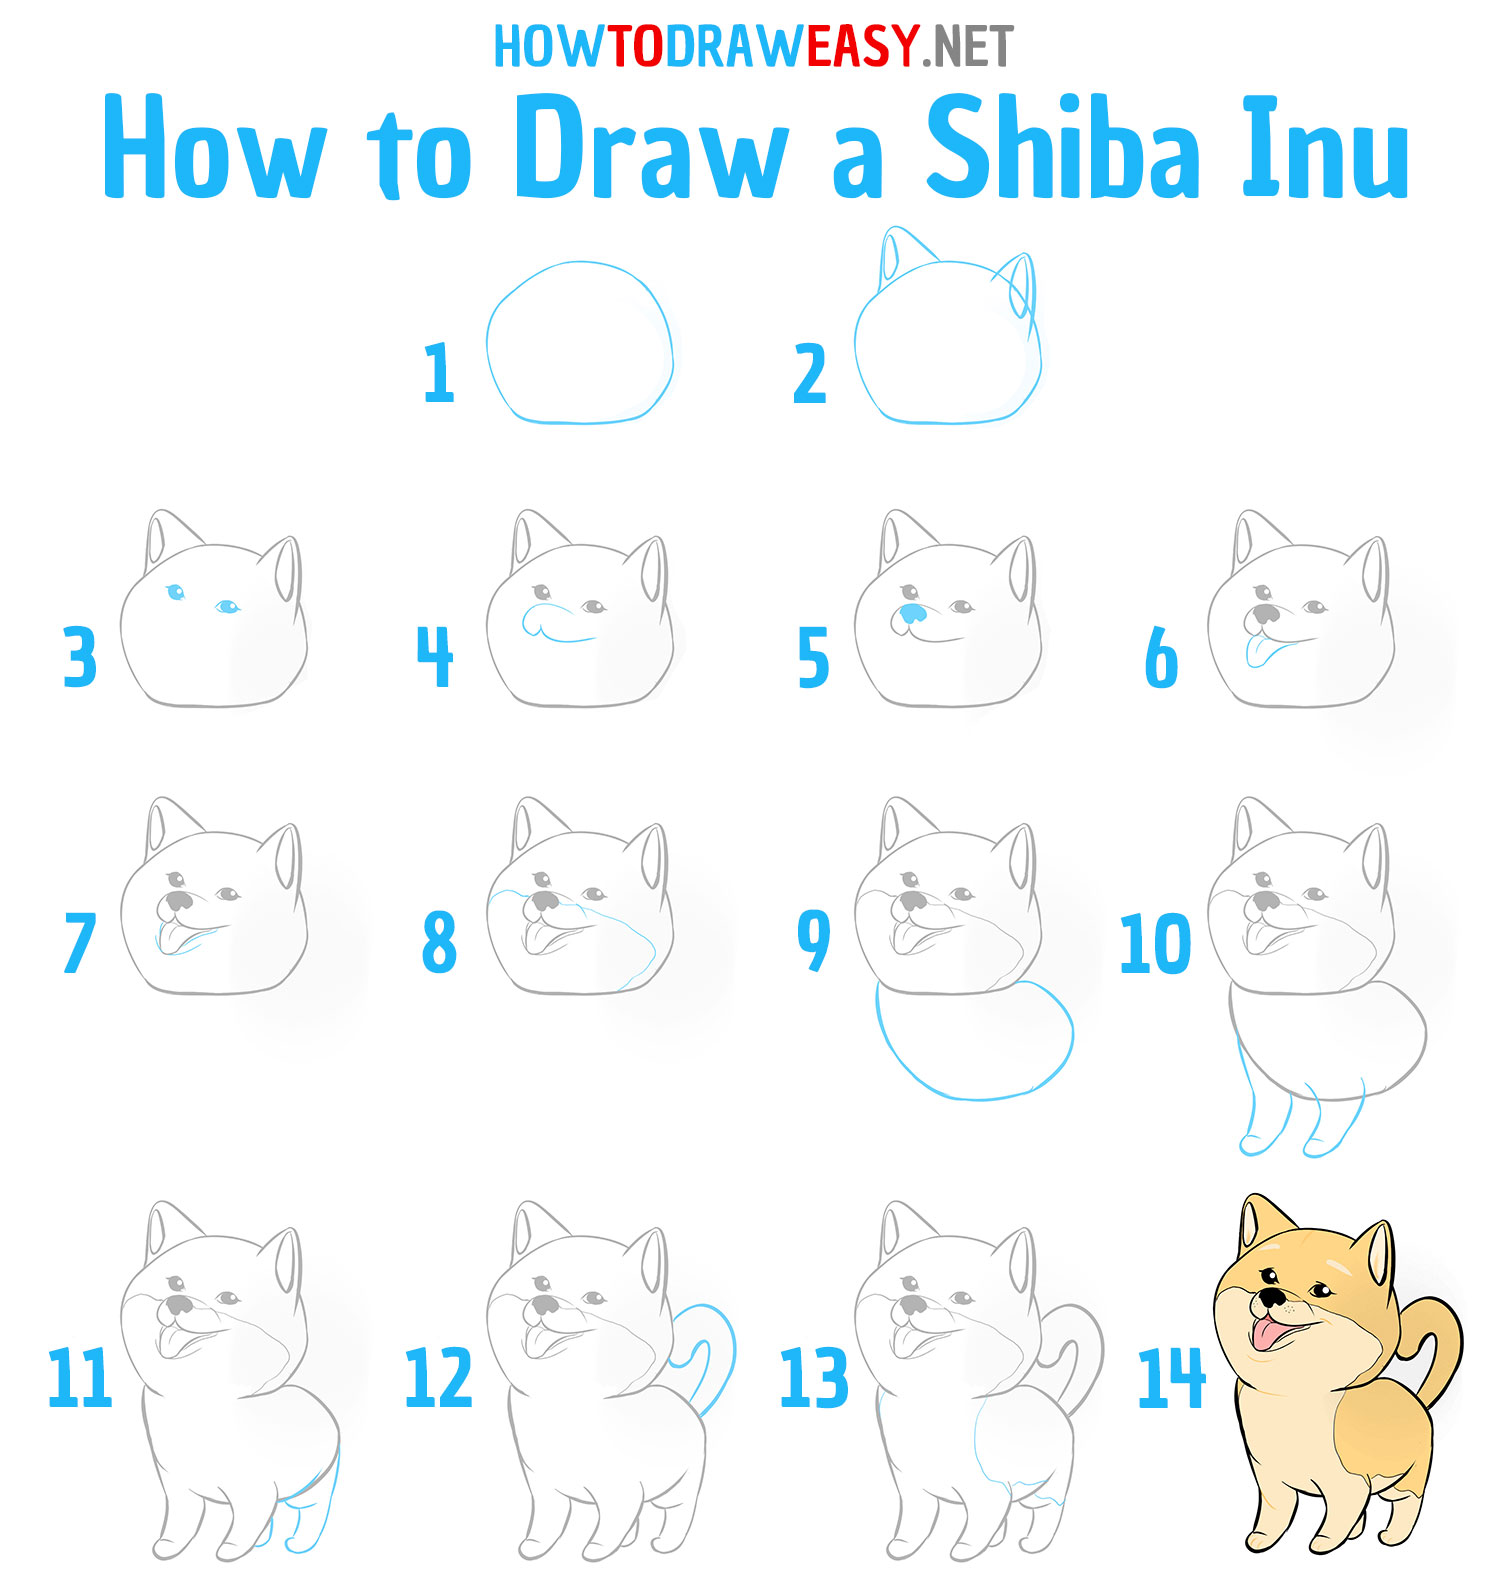 How to Draw a Shiba Inu Step by Step